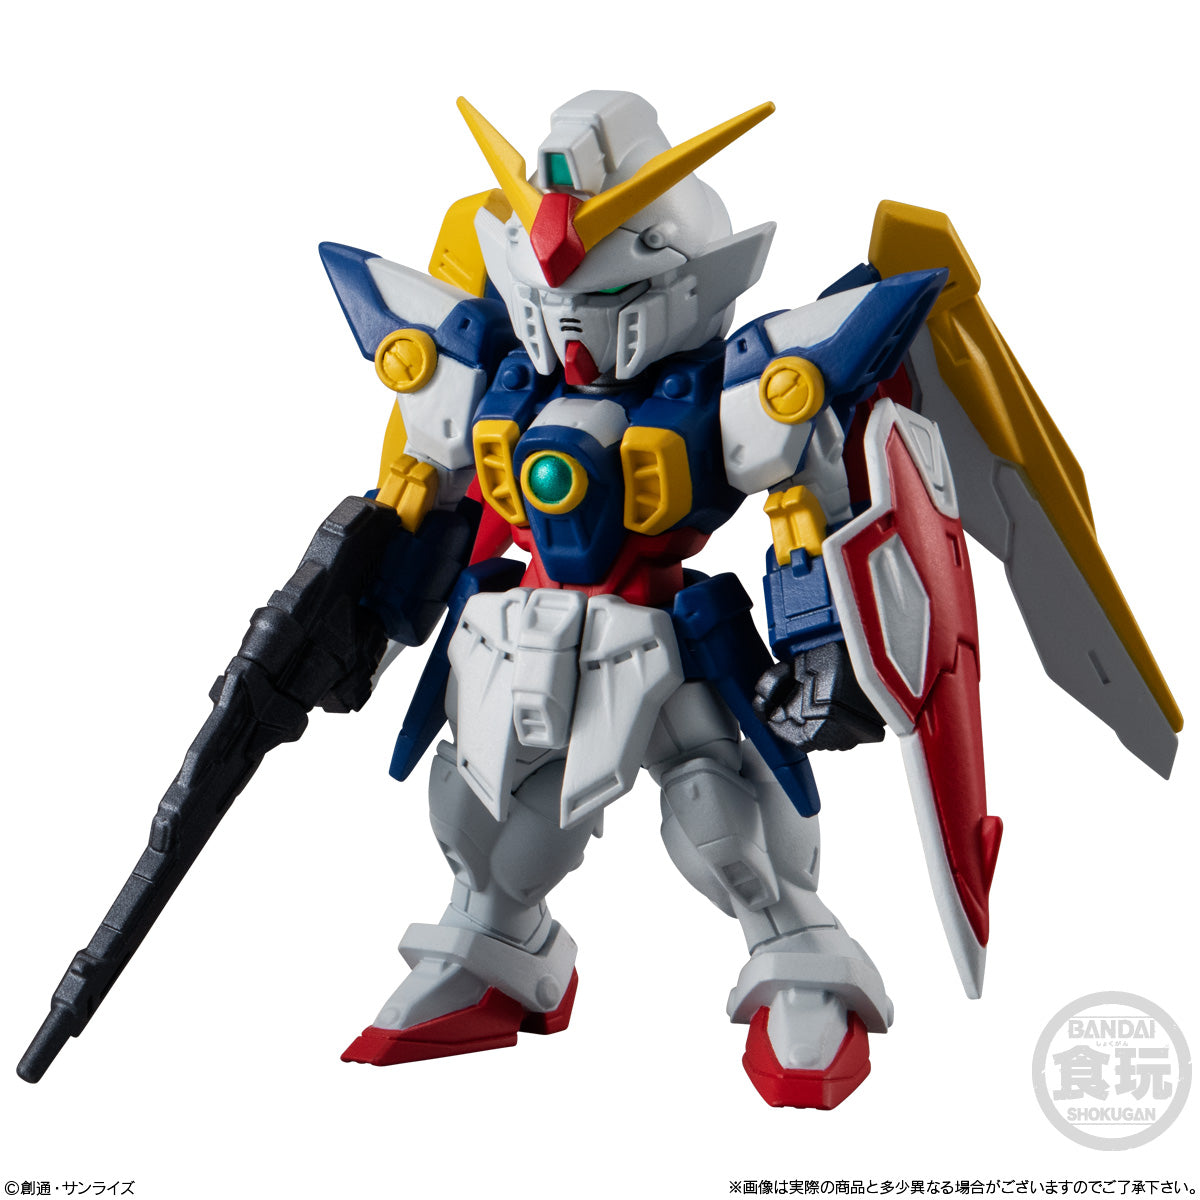 Bandai - Shokugan - Mobile Suit Gundam - FW Gundam Converge #25 (Box of 10) - Marvelous Toys